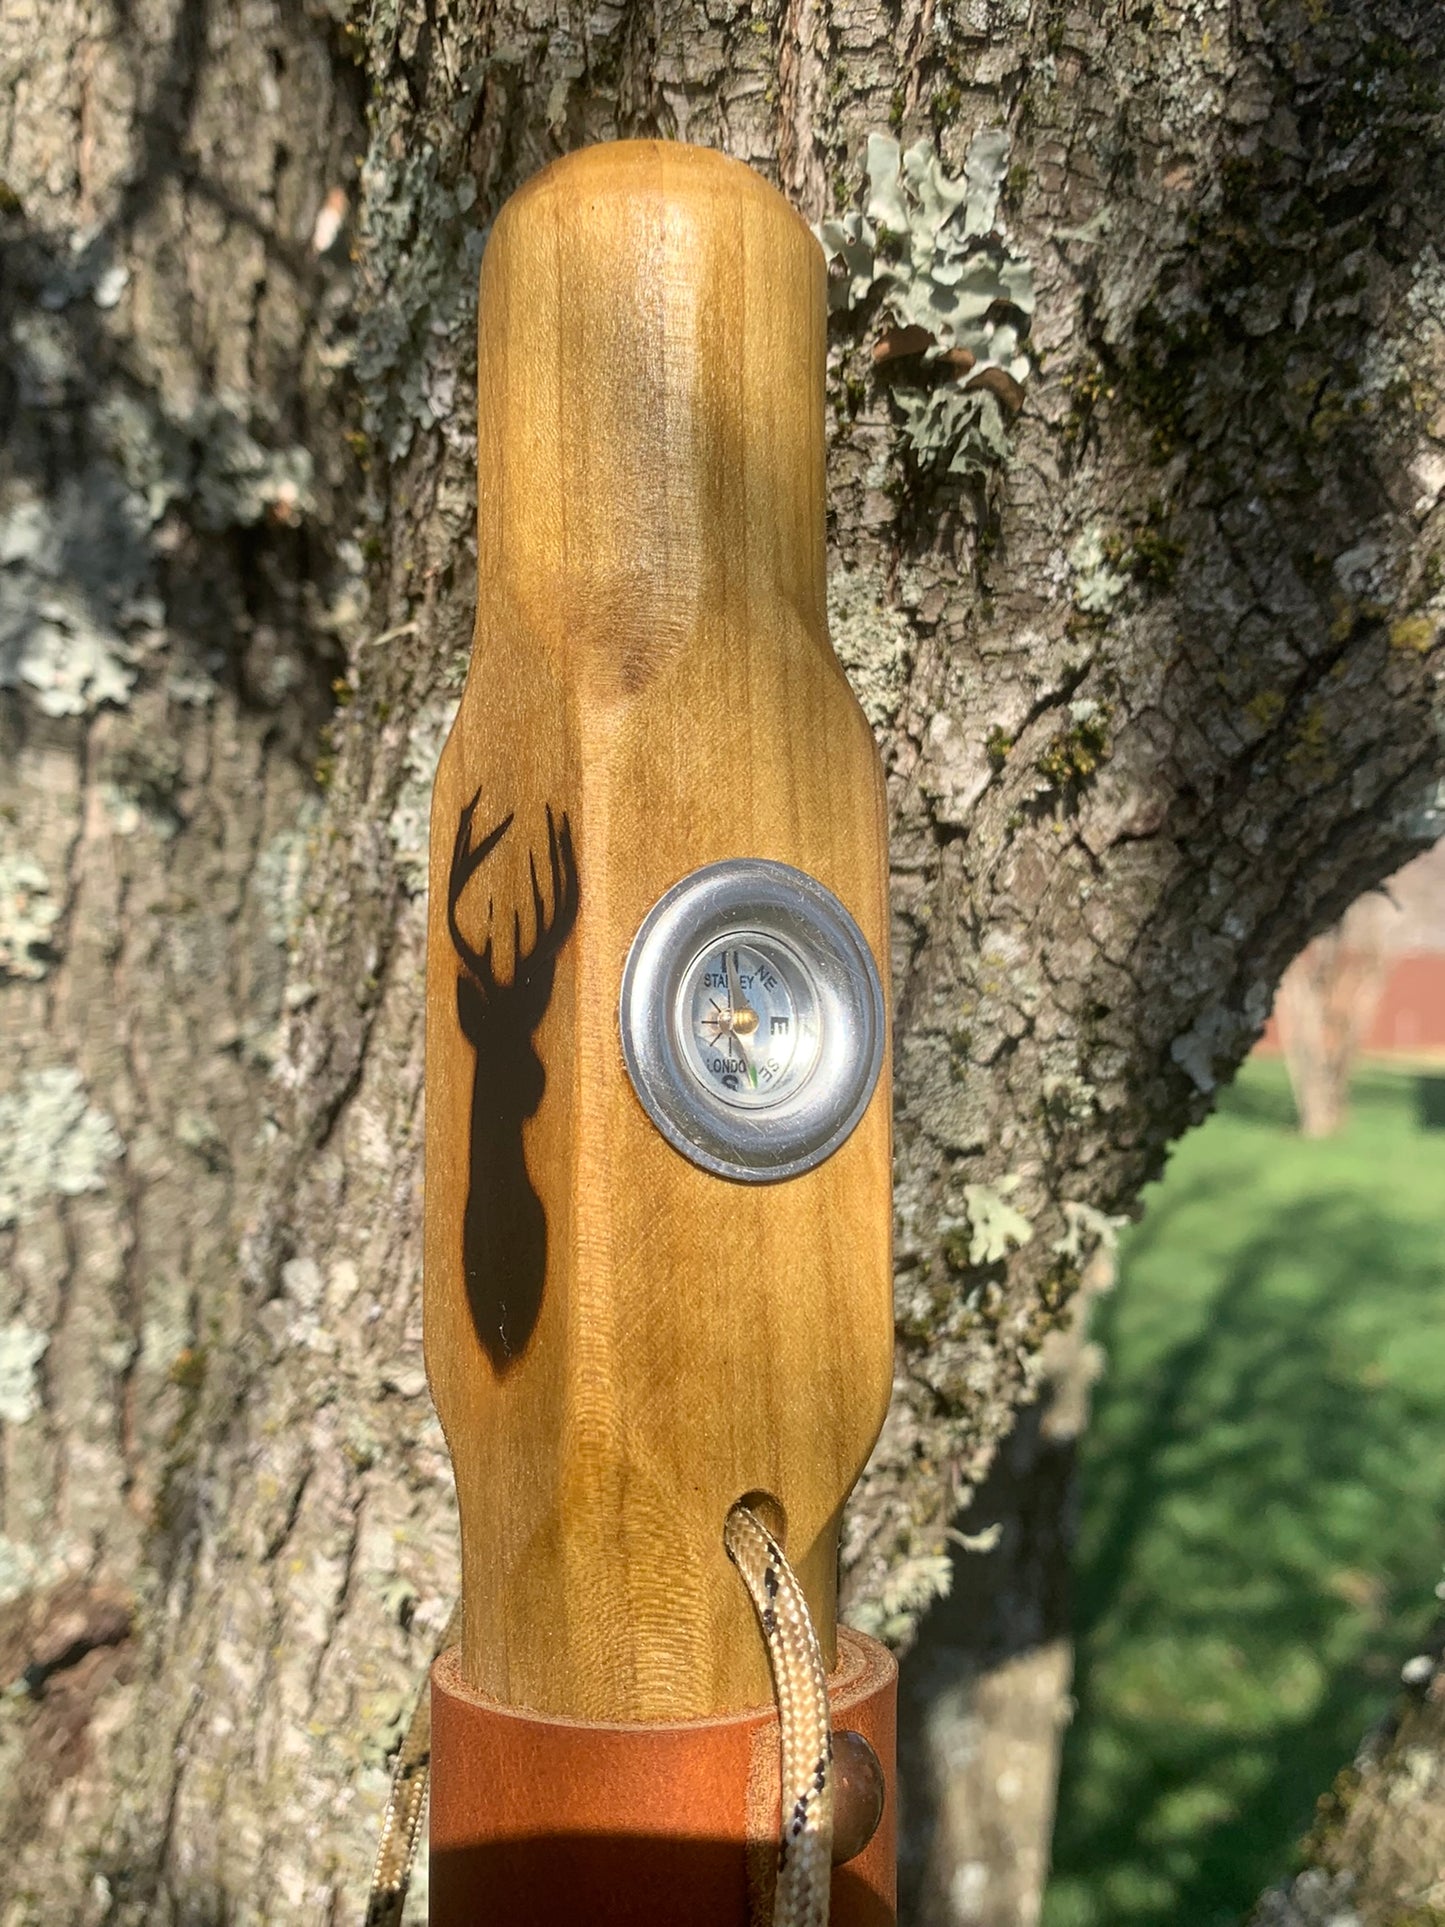 Natural Earth Tones Poplar Ash Hard Wood Walking Stick Hiking Staff Hand Carved Pole